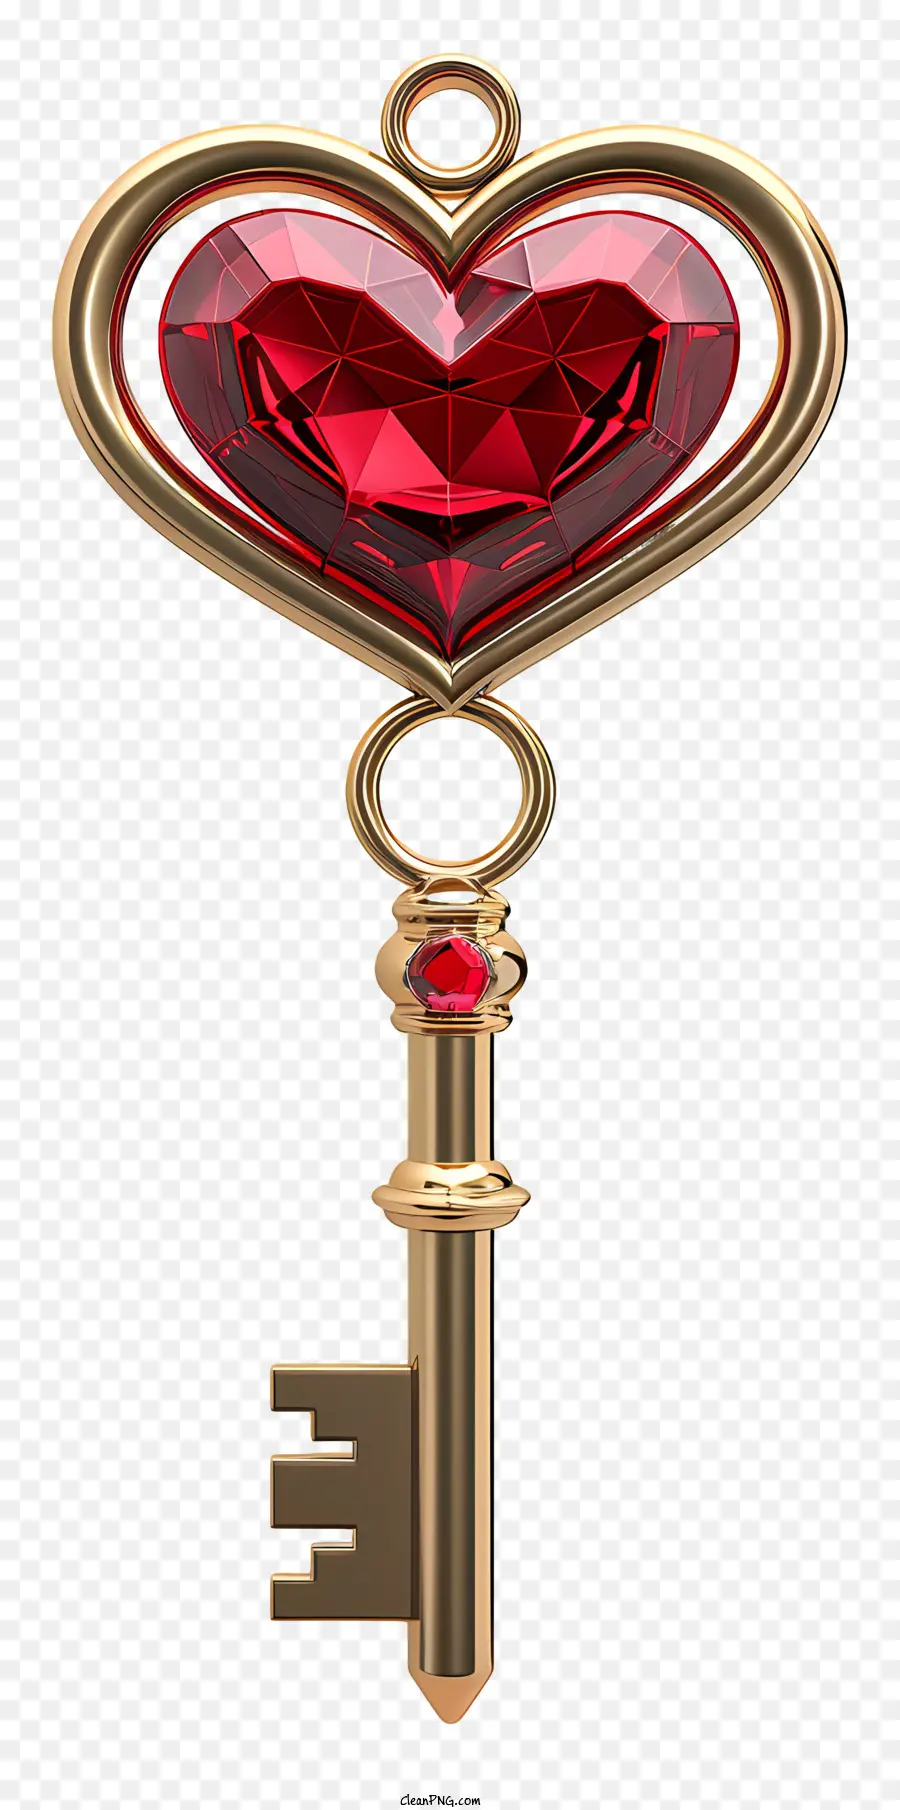 Chiave di San Valentino Key Golden Key a forma di cuore Red Accenti a forma di pietra a forma di cuore - Chiave di cuore dorato con pietra rossa e diamanti